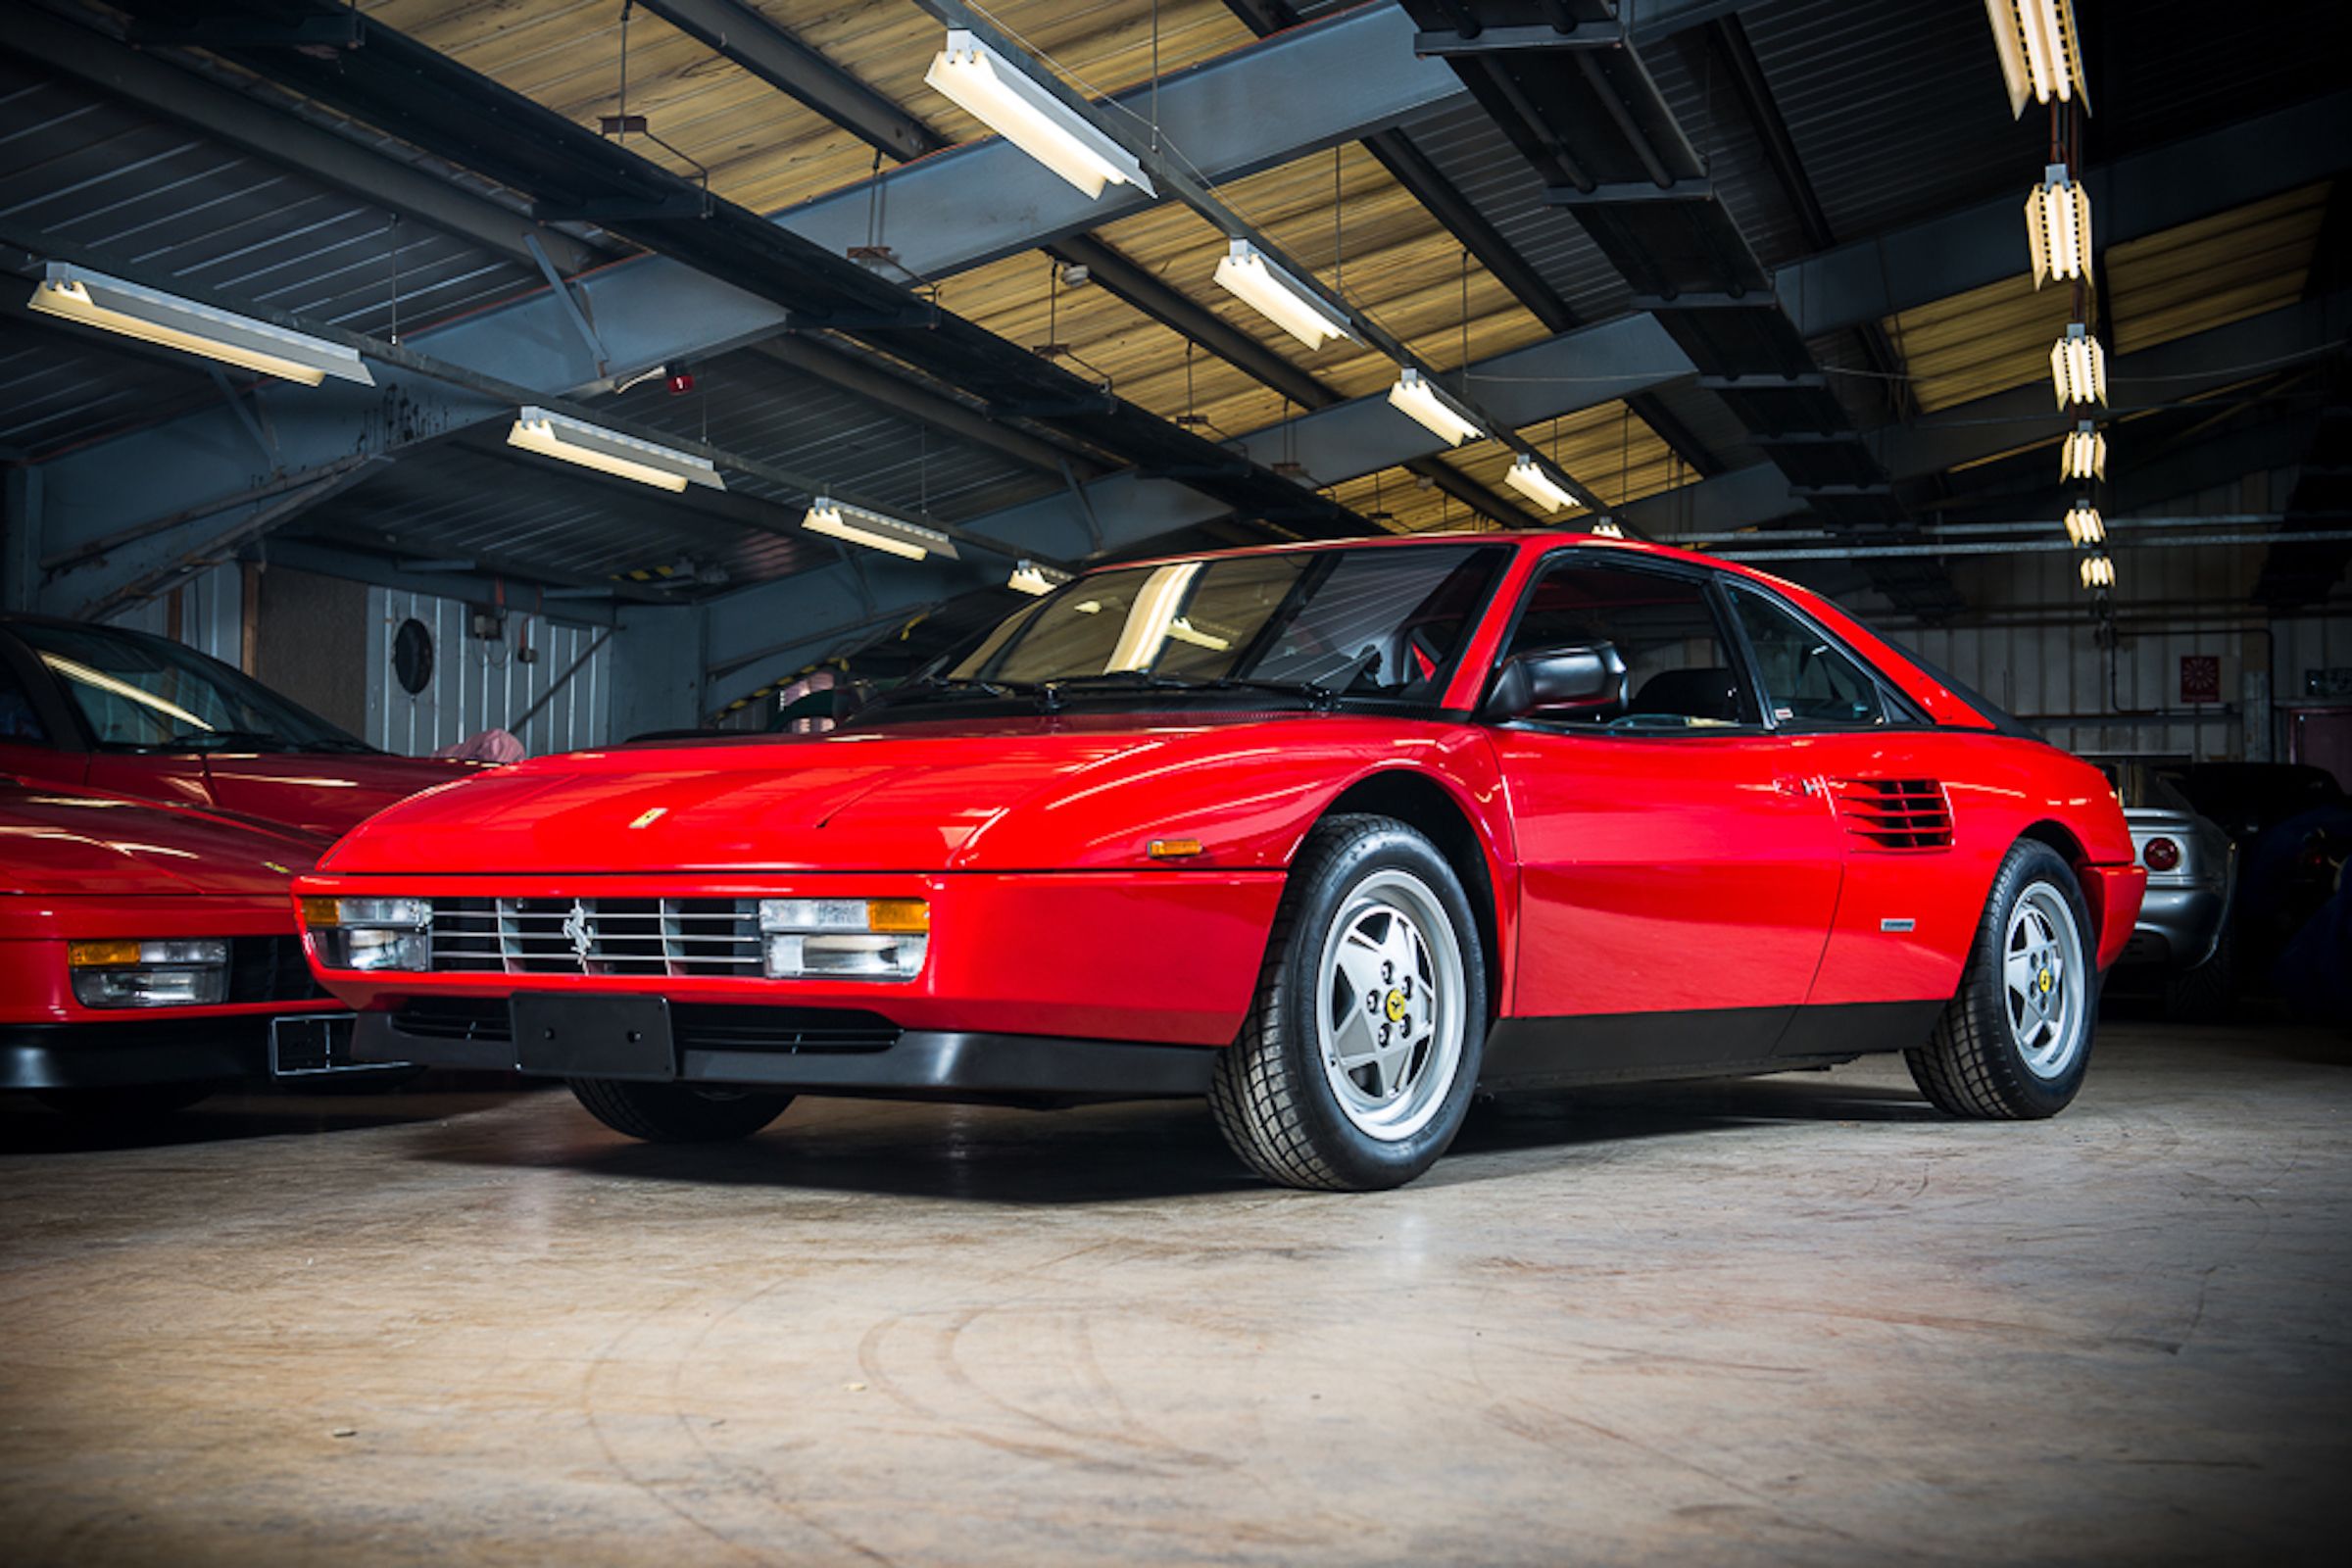 Ferrari Mondial in a garage